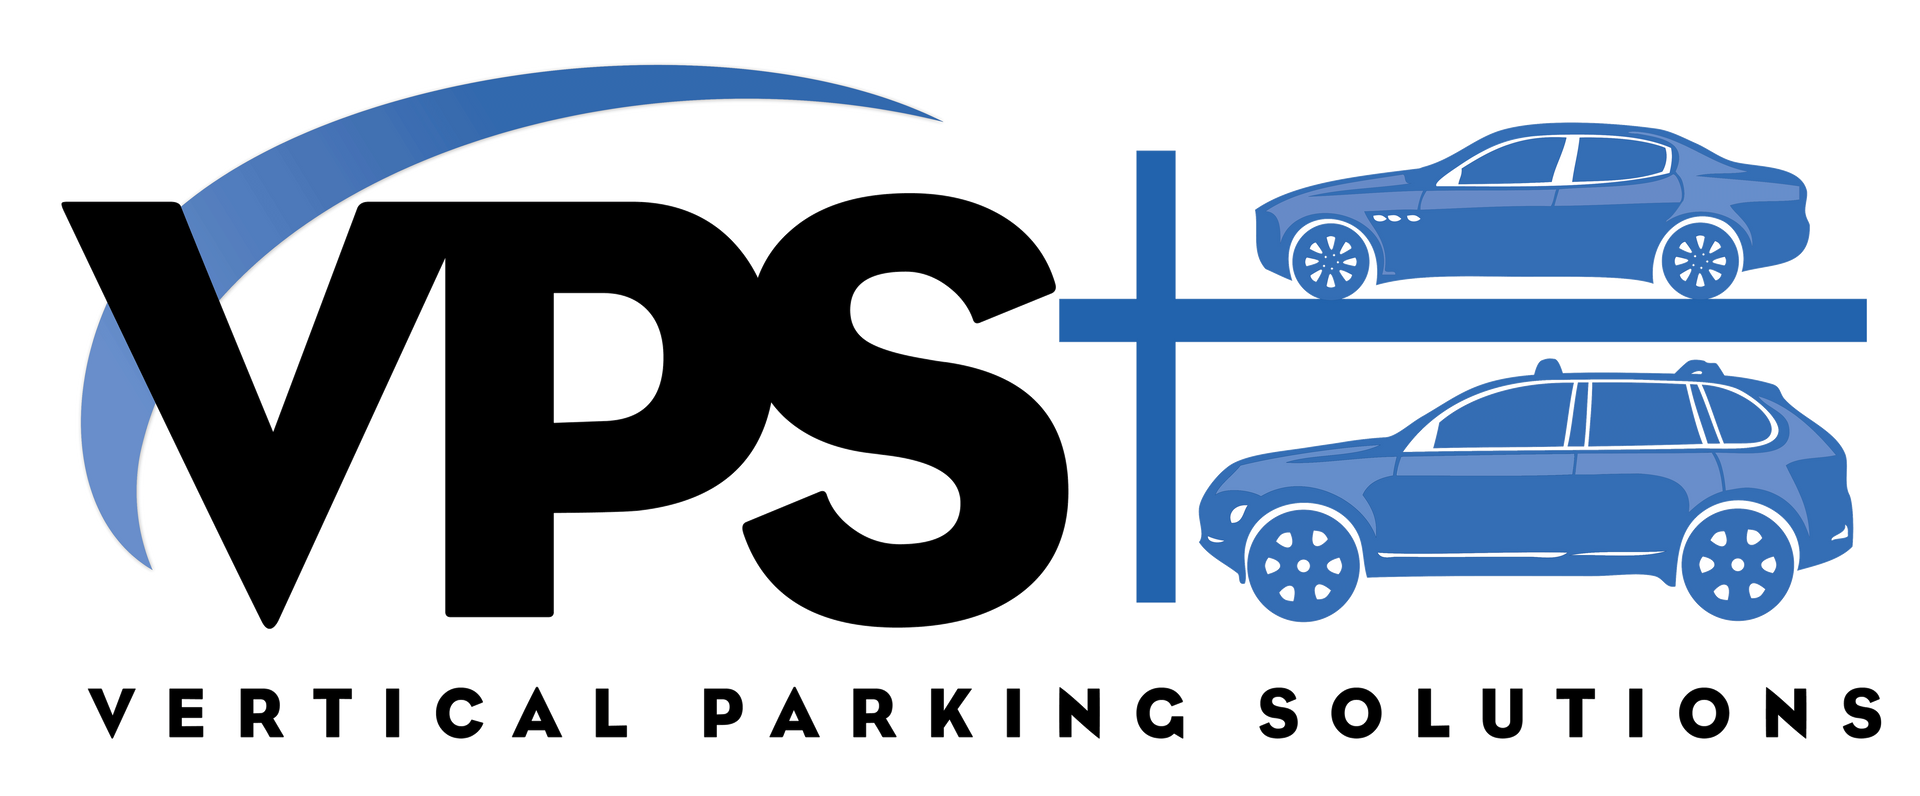 Vertical Parking solutions logo